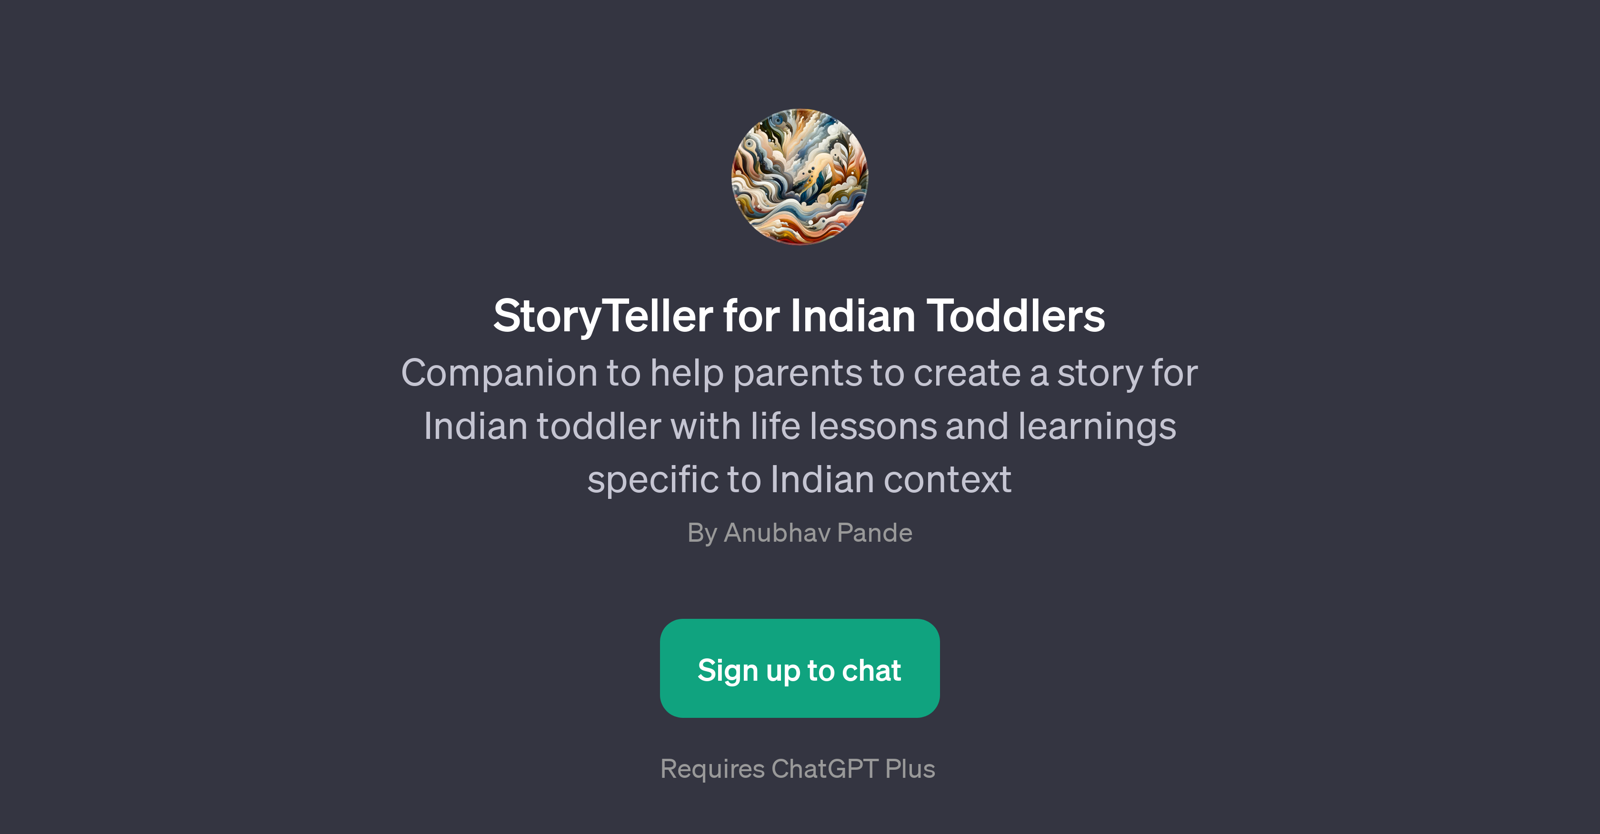 StoryTeller for Indian Toddlers website